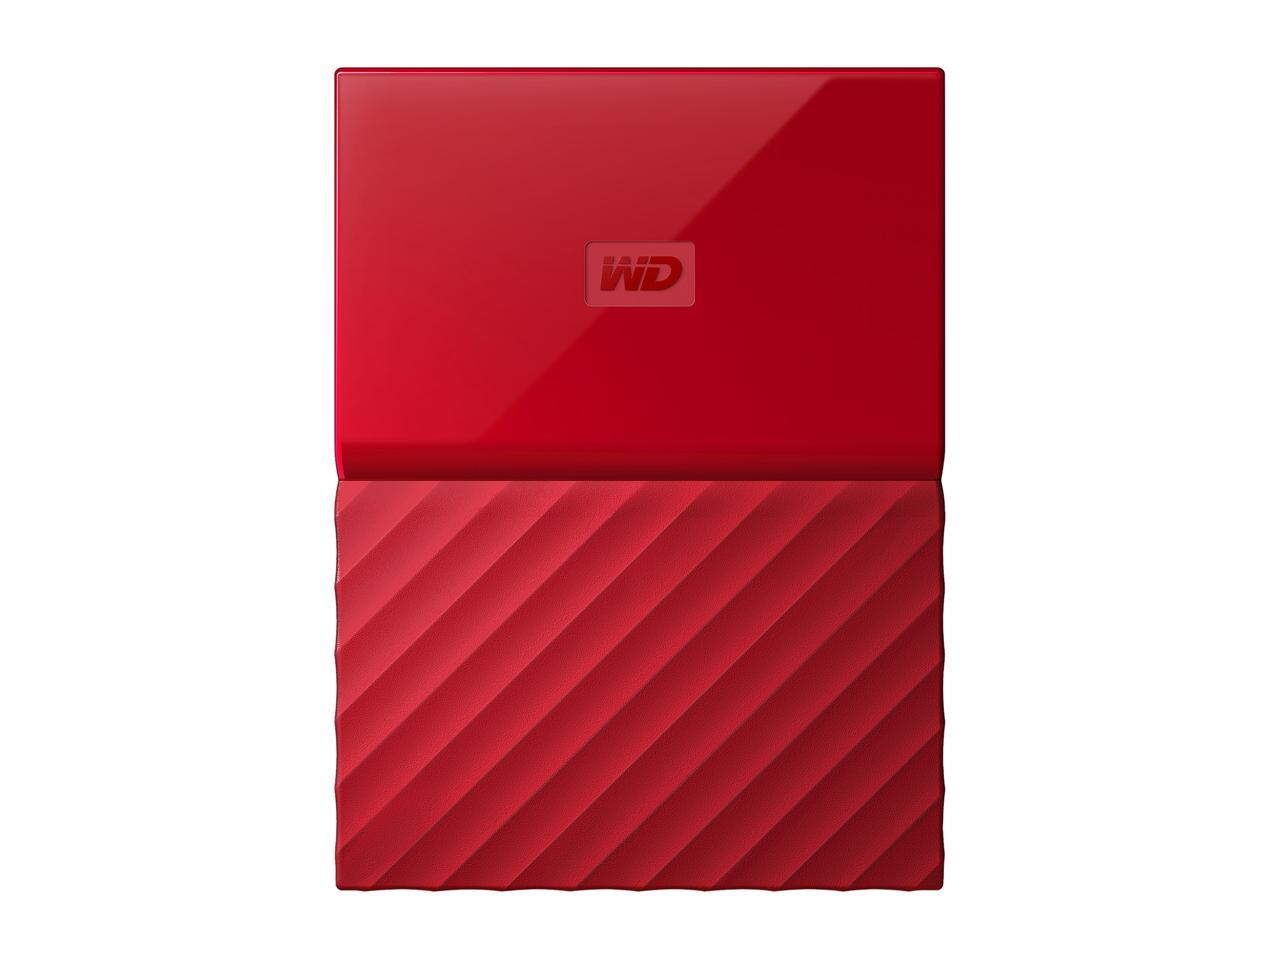 WD 1TB My Passport Portable Hard Drive USB 3.0 Model WDBYNN0010BRD-WESN Red